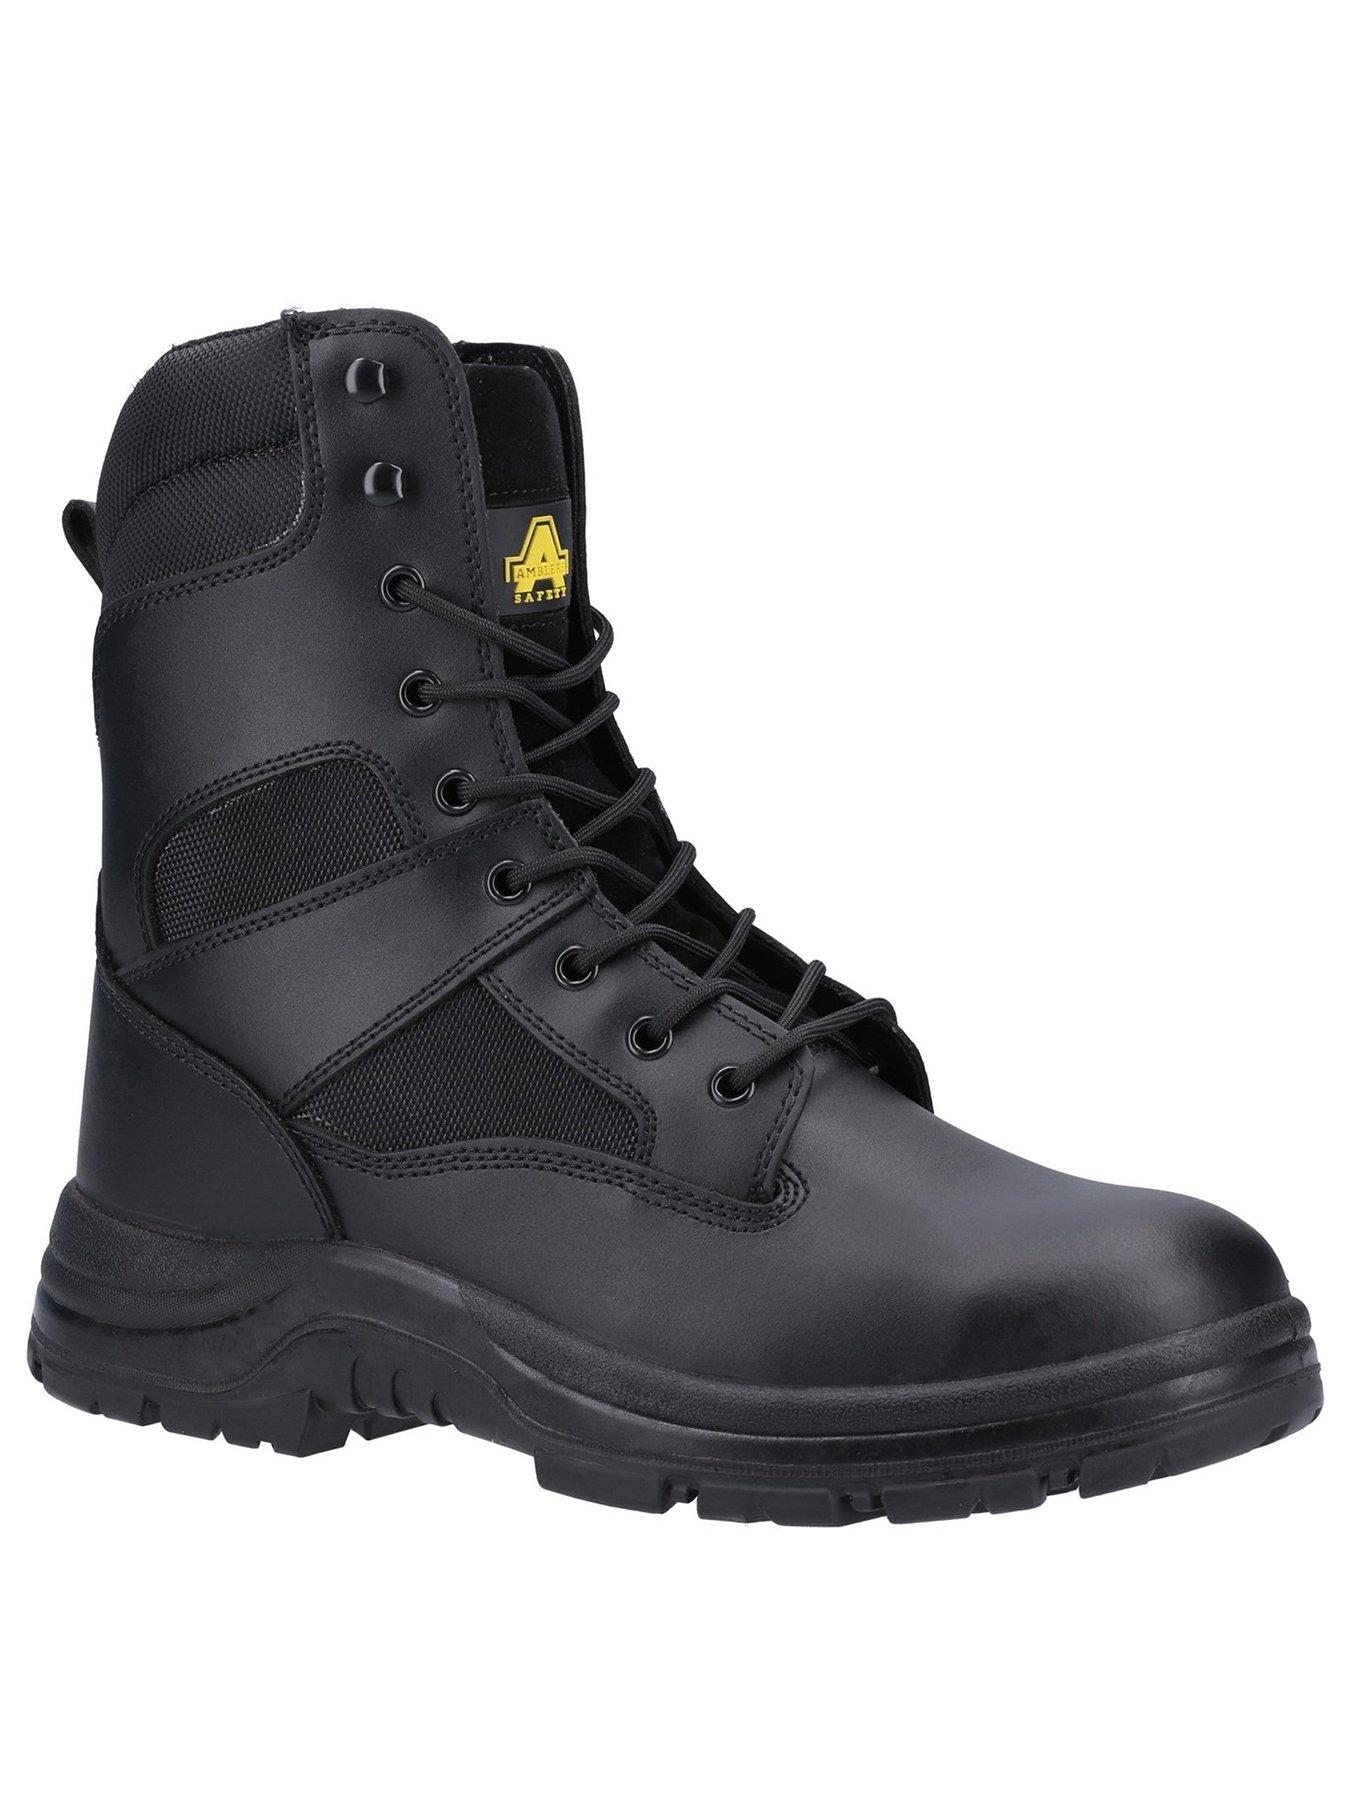 Shoes & boots Amblers Safety 008 S3 Src Side Zip Boots - Black